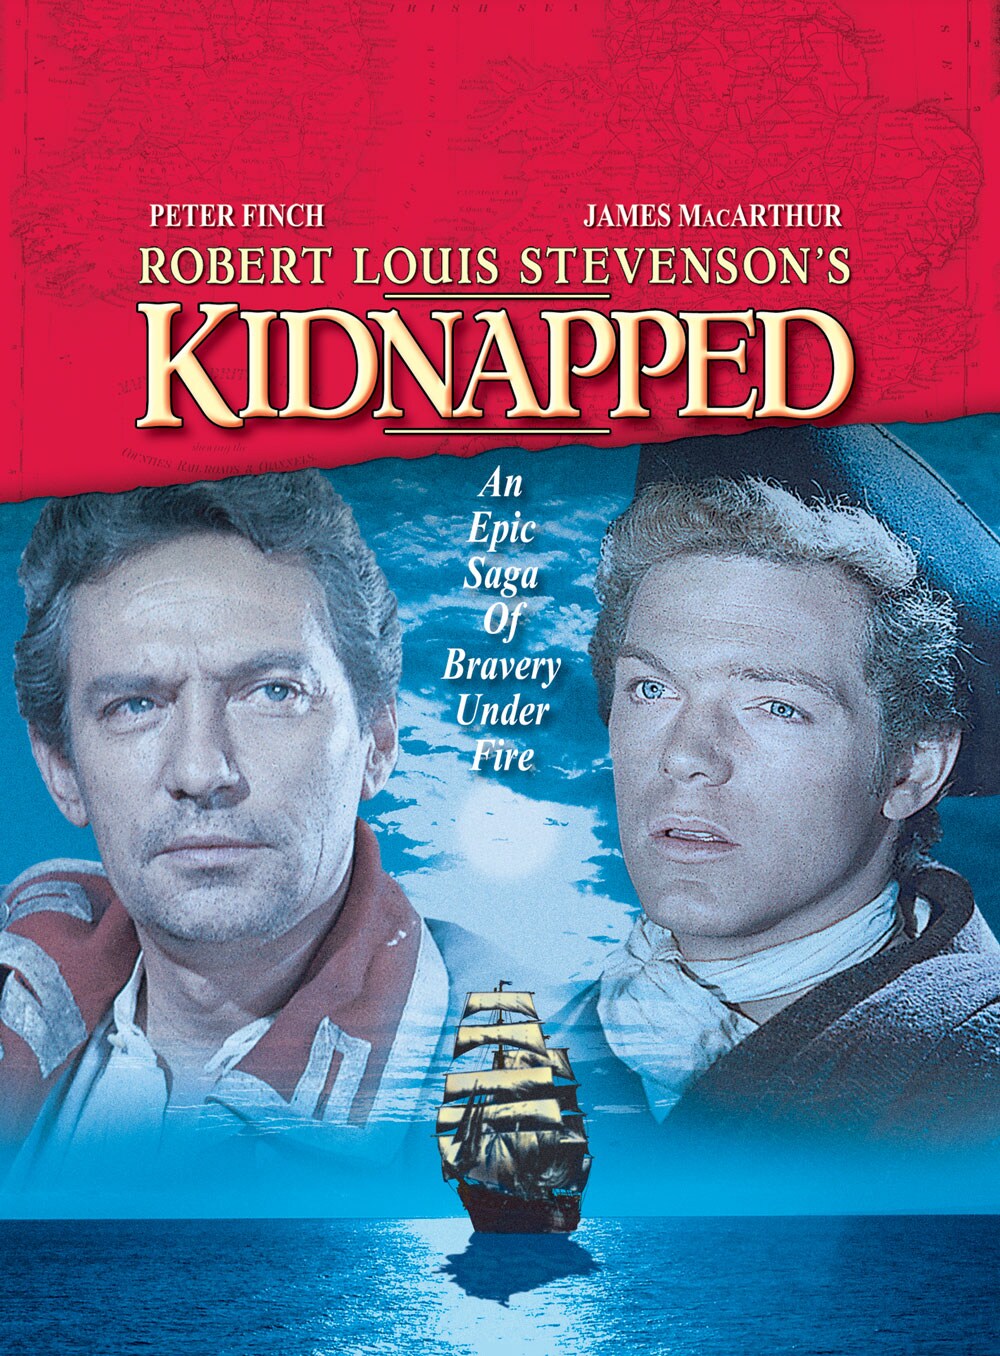 Peter Finch | James MacArthur | Rober Lous Stevenson's Kidnapped: An Epic Saga of Bravery Under Fire movie poster